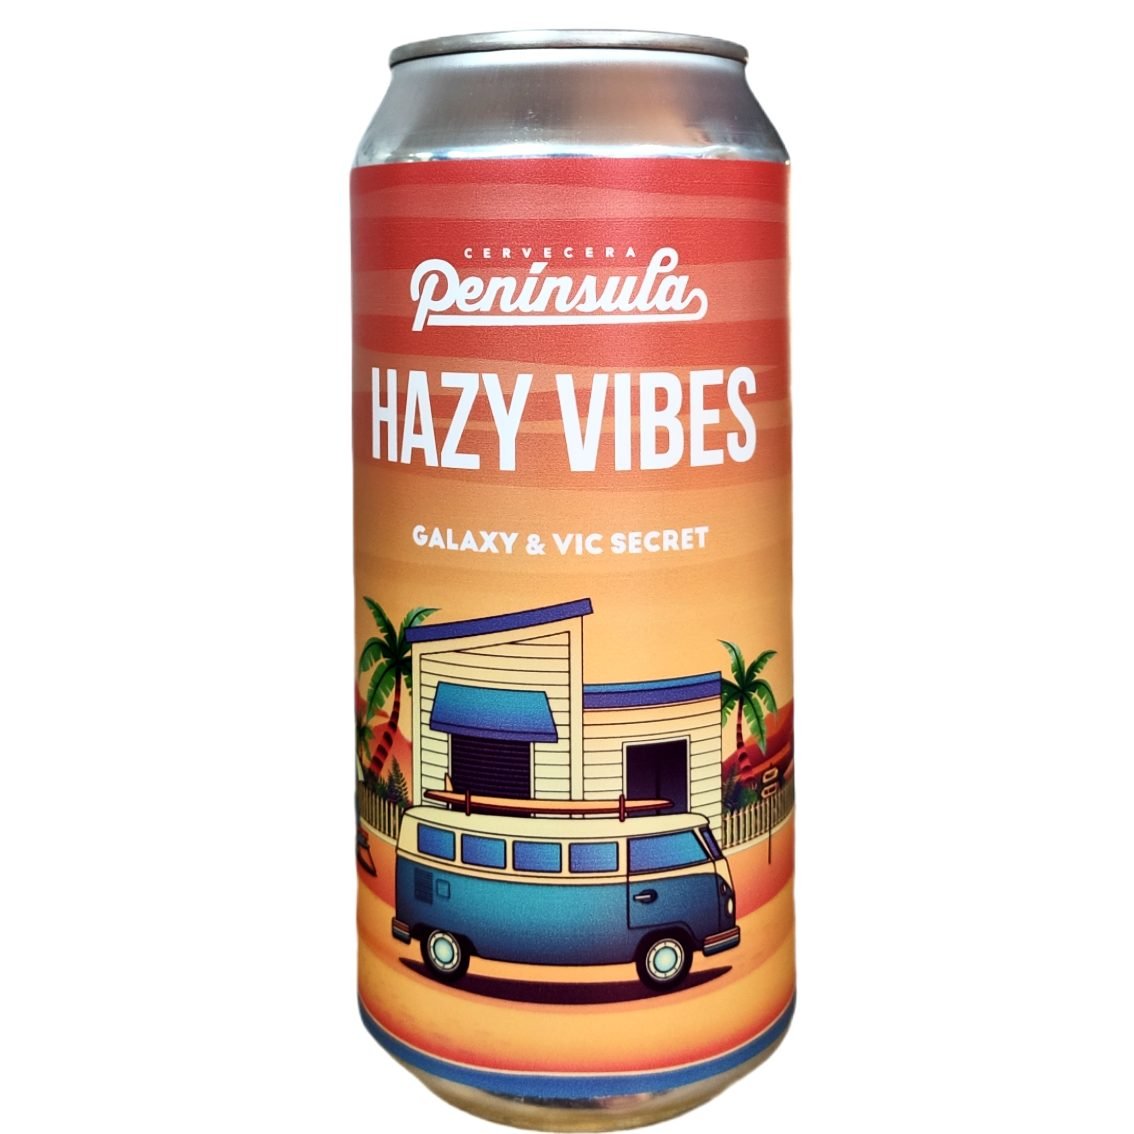 Cervecera Península - Hazy Vibes Galaxy & Vic Secret 44cl